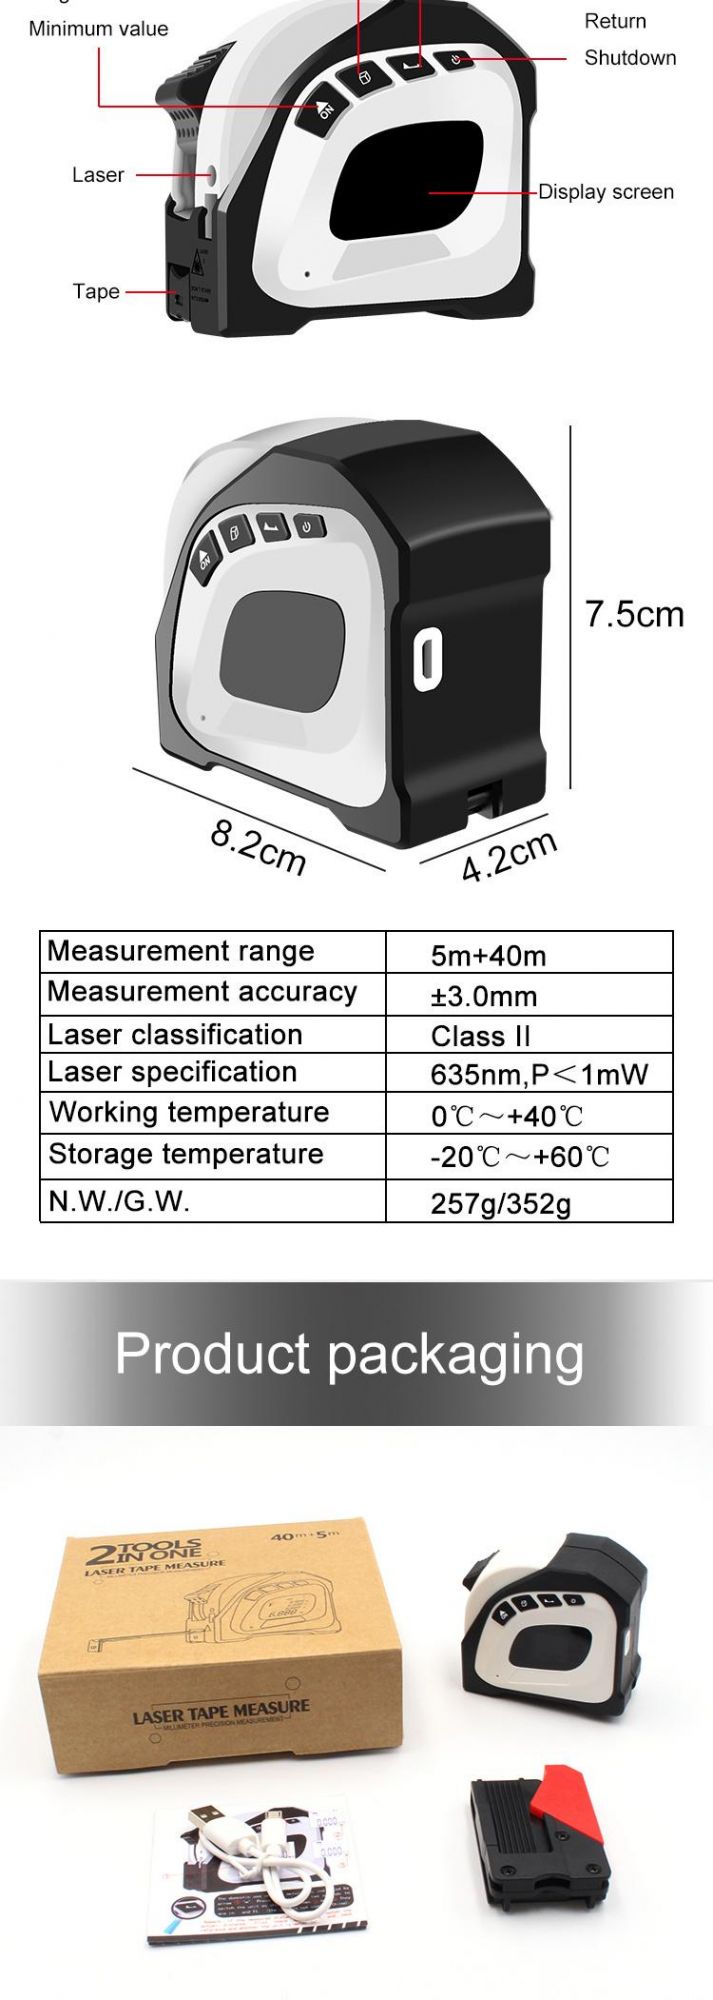 40m Best Laser Measuring Tape with 5m Ruler